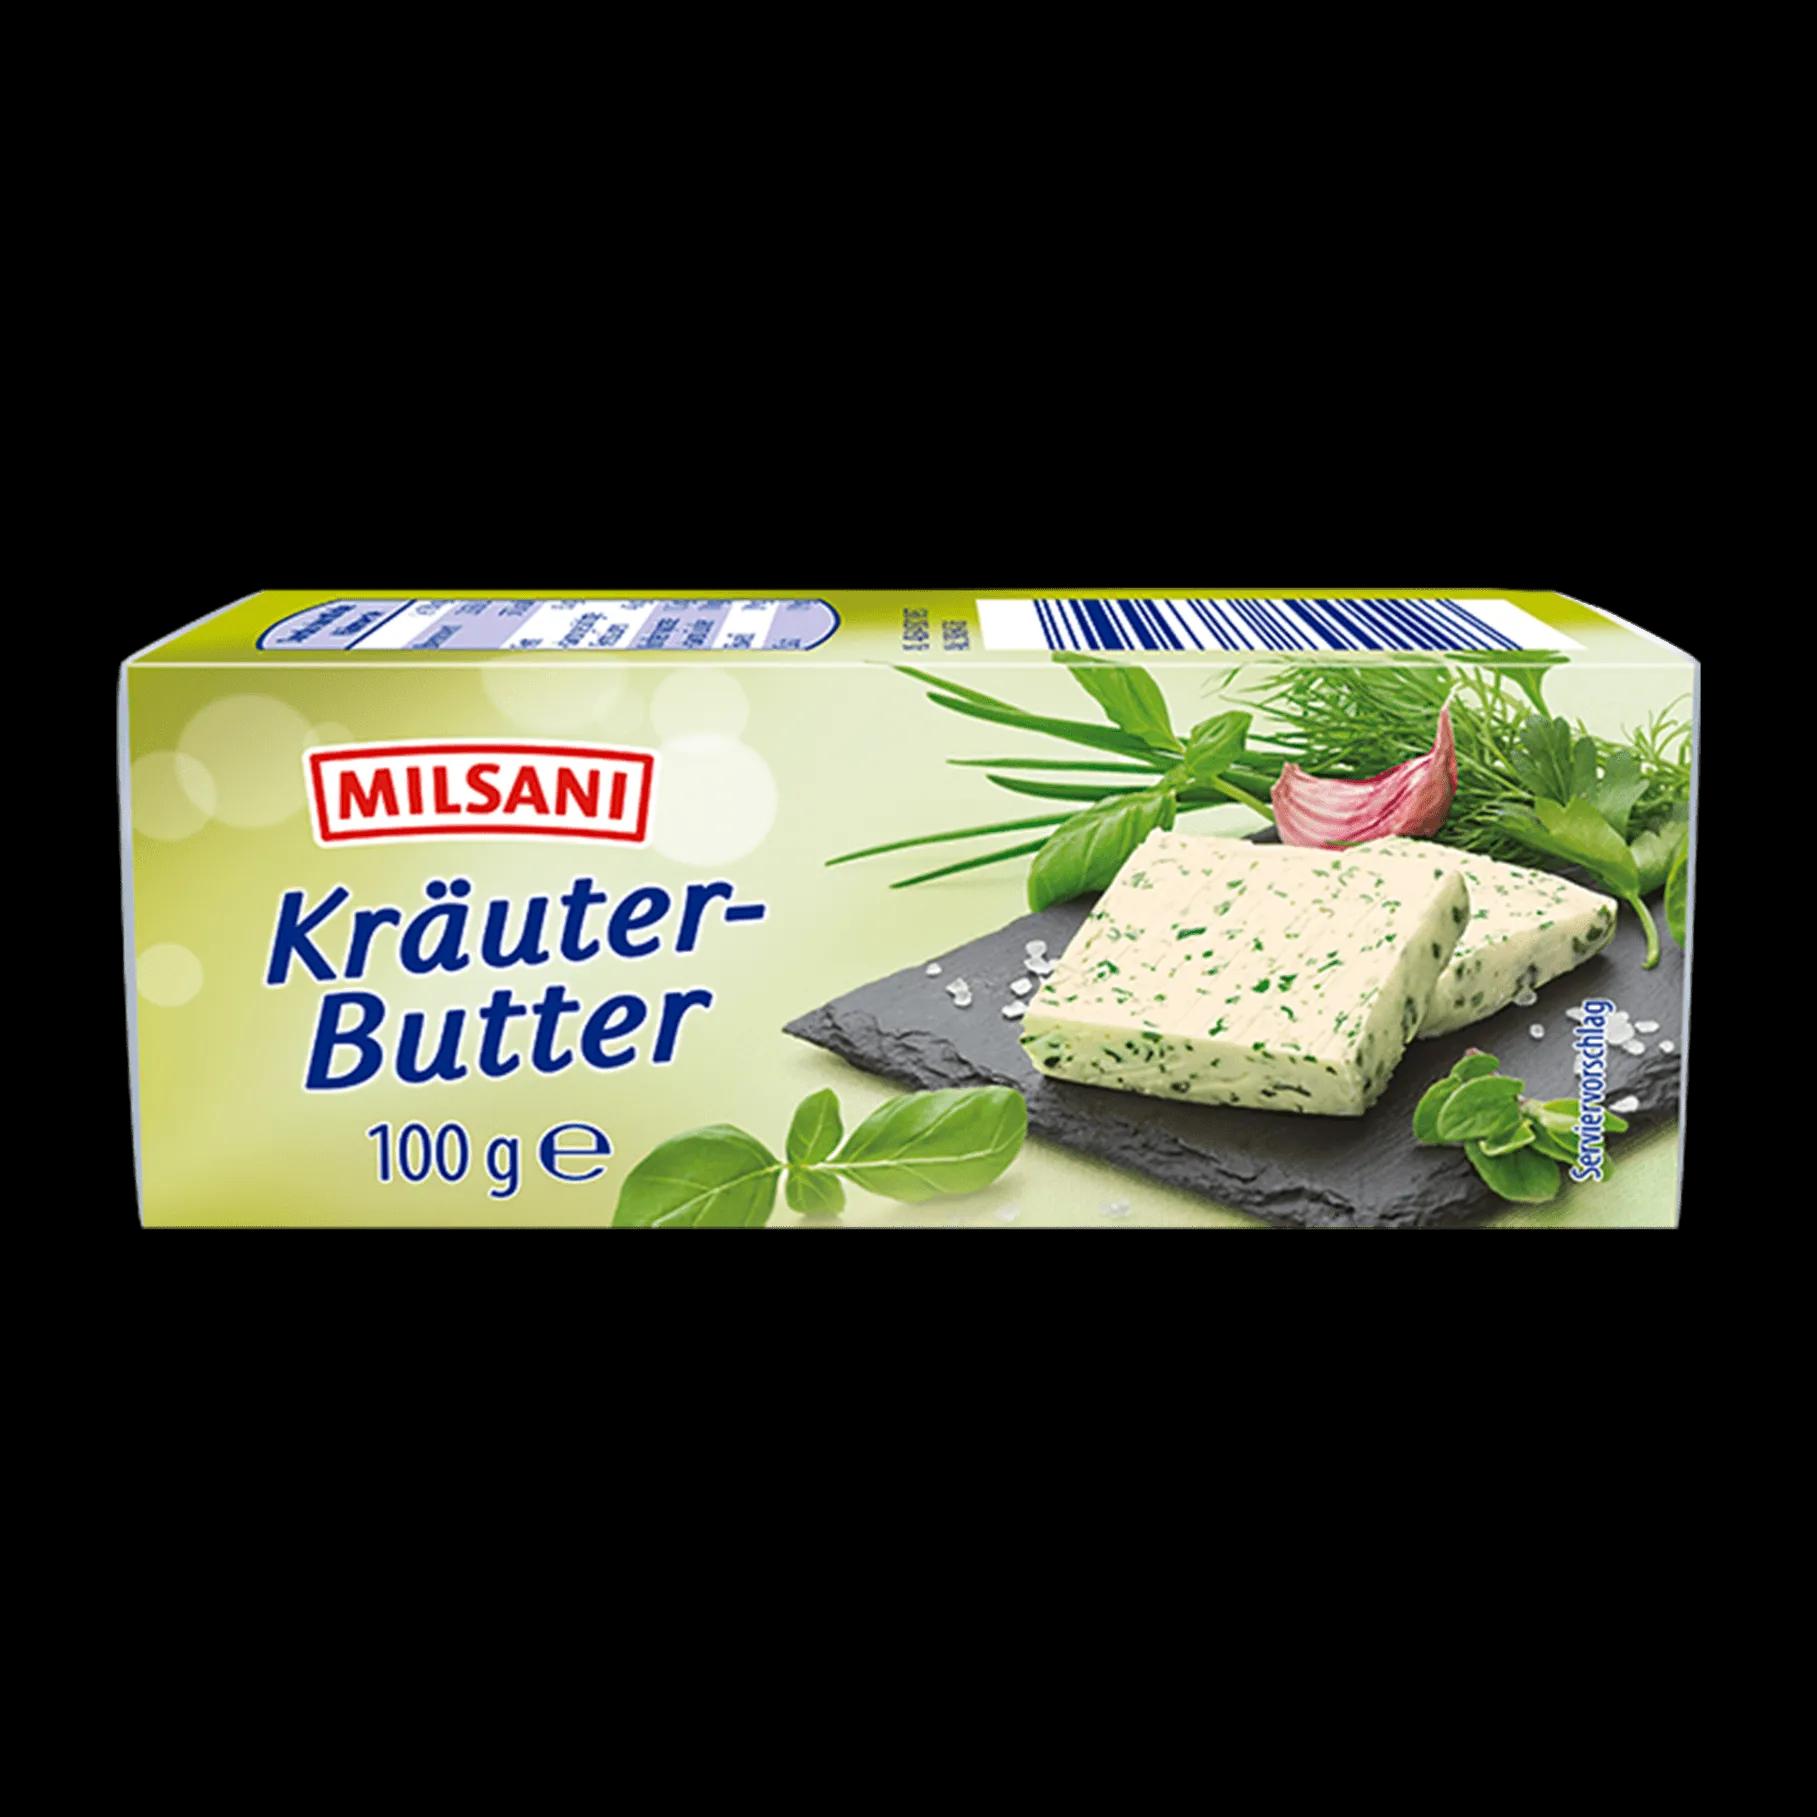 MILSANI Kräuter- / Knoblauch-Butter günstig bei ALDI Nord